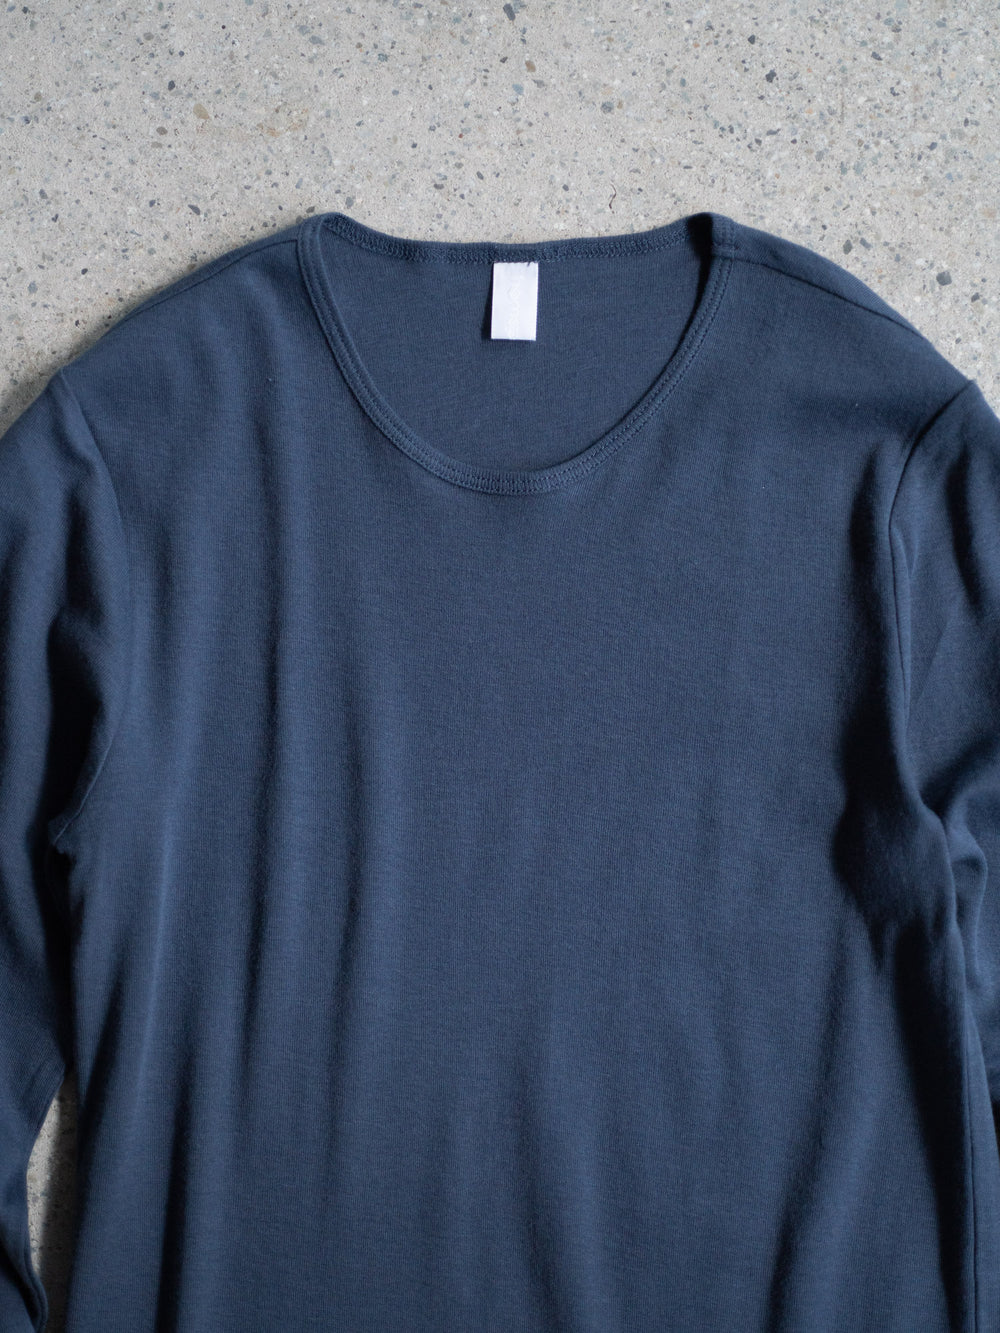 Thin Cotton Crewneck Shirt - Slate